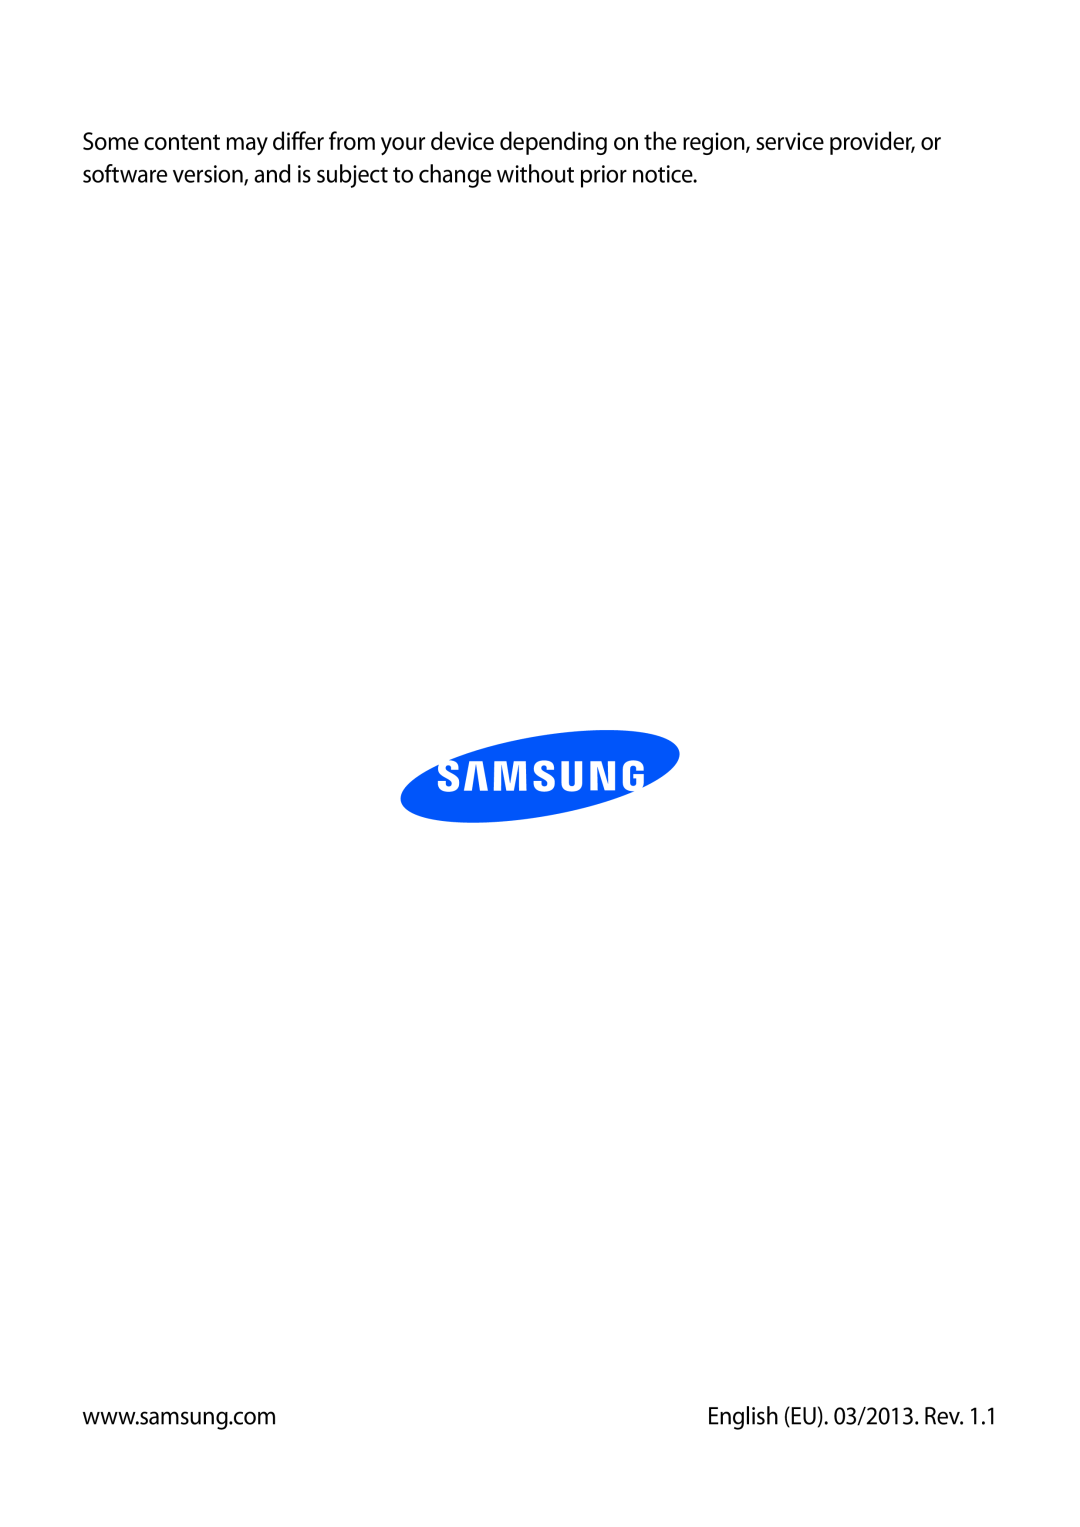 Samsung GT-N5100 user manual English EU. 03/2013. Rev 